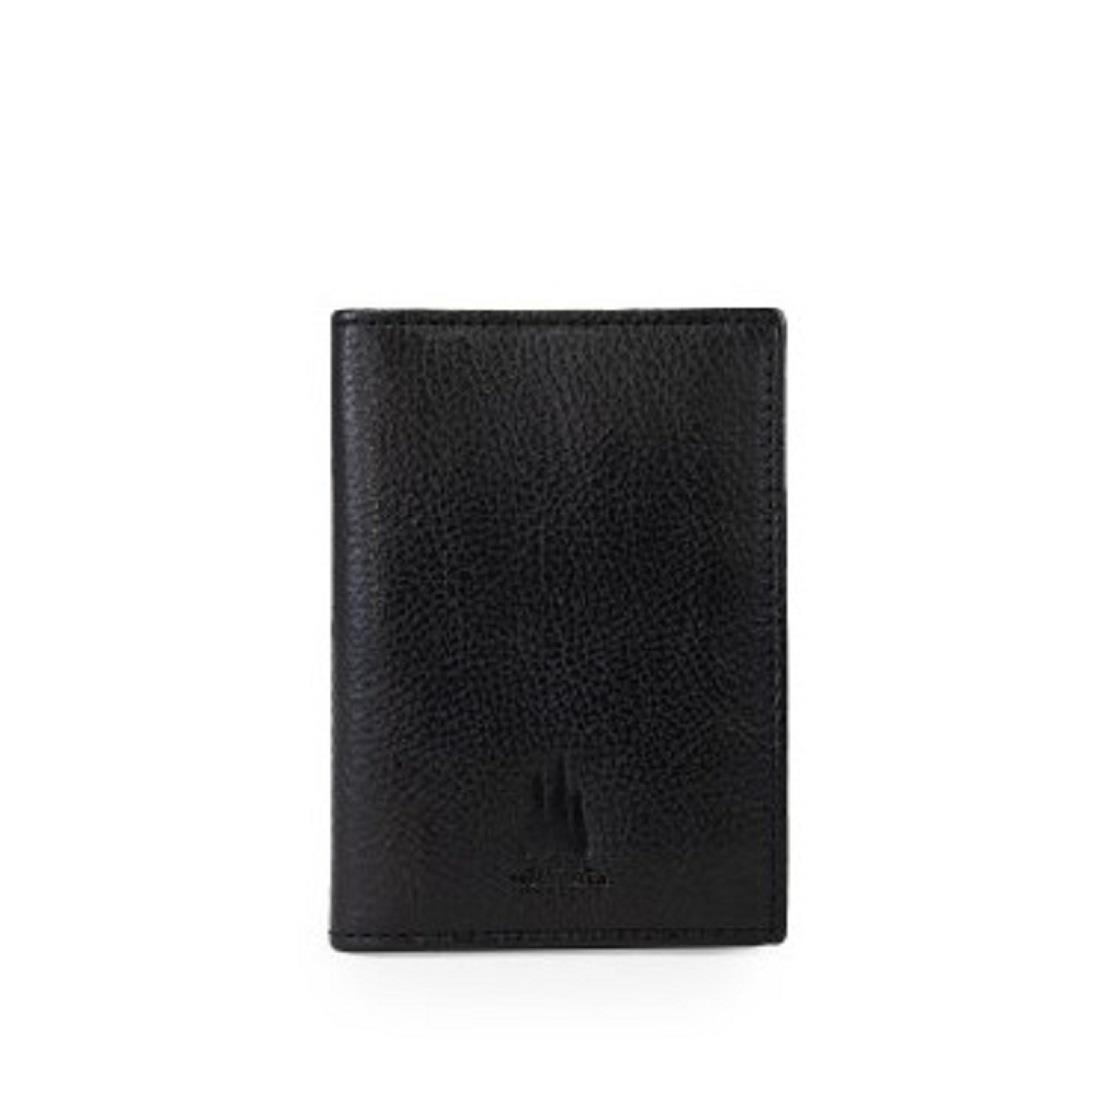 Black leather card holder - PIEROTUCCI